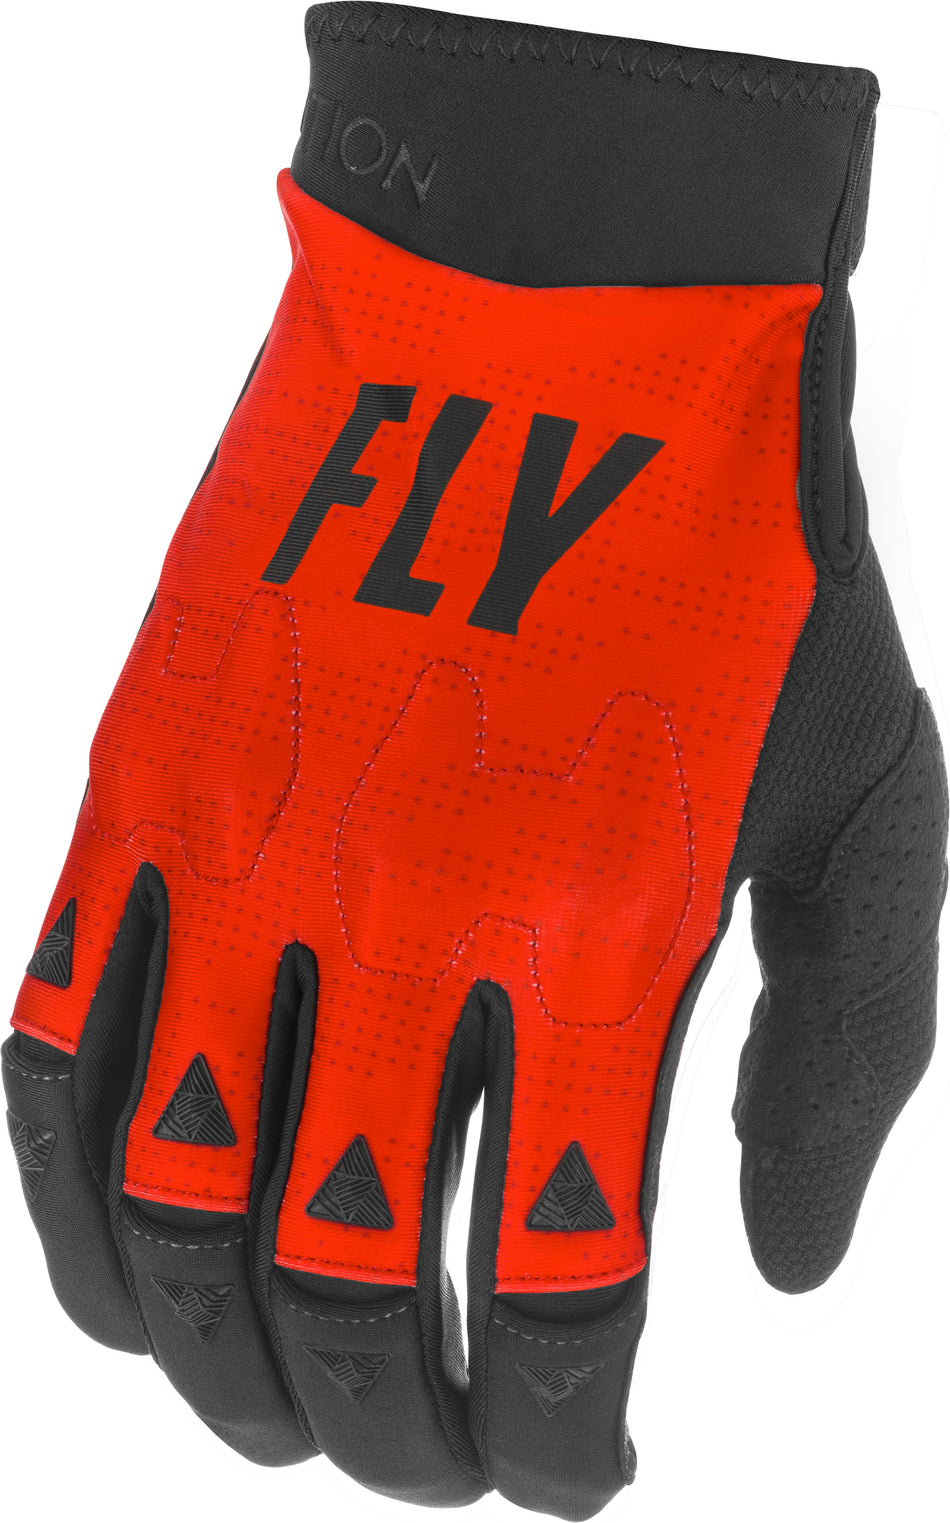 FLY RACING Evolution Dst Gloves Red/Black/White Sz 08 374-11208